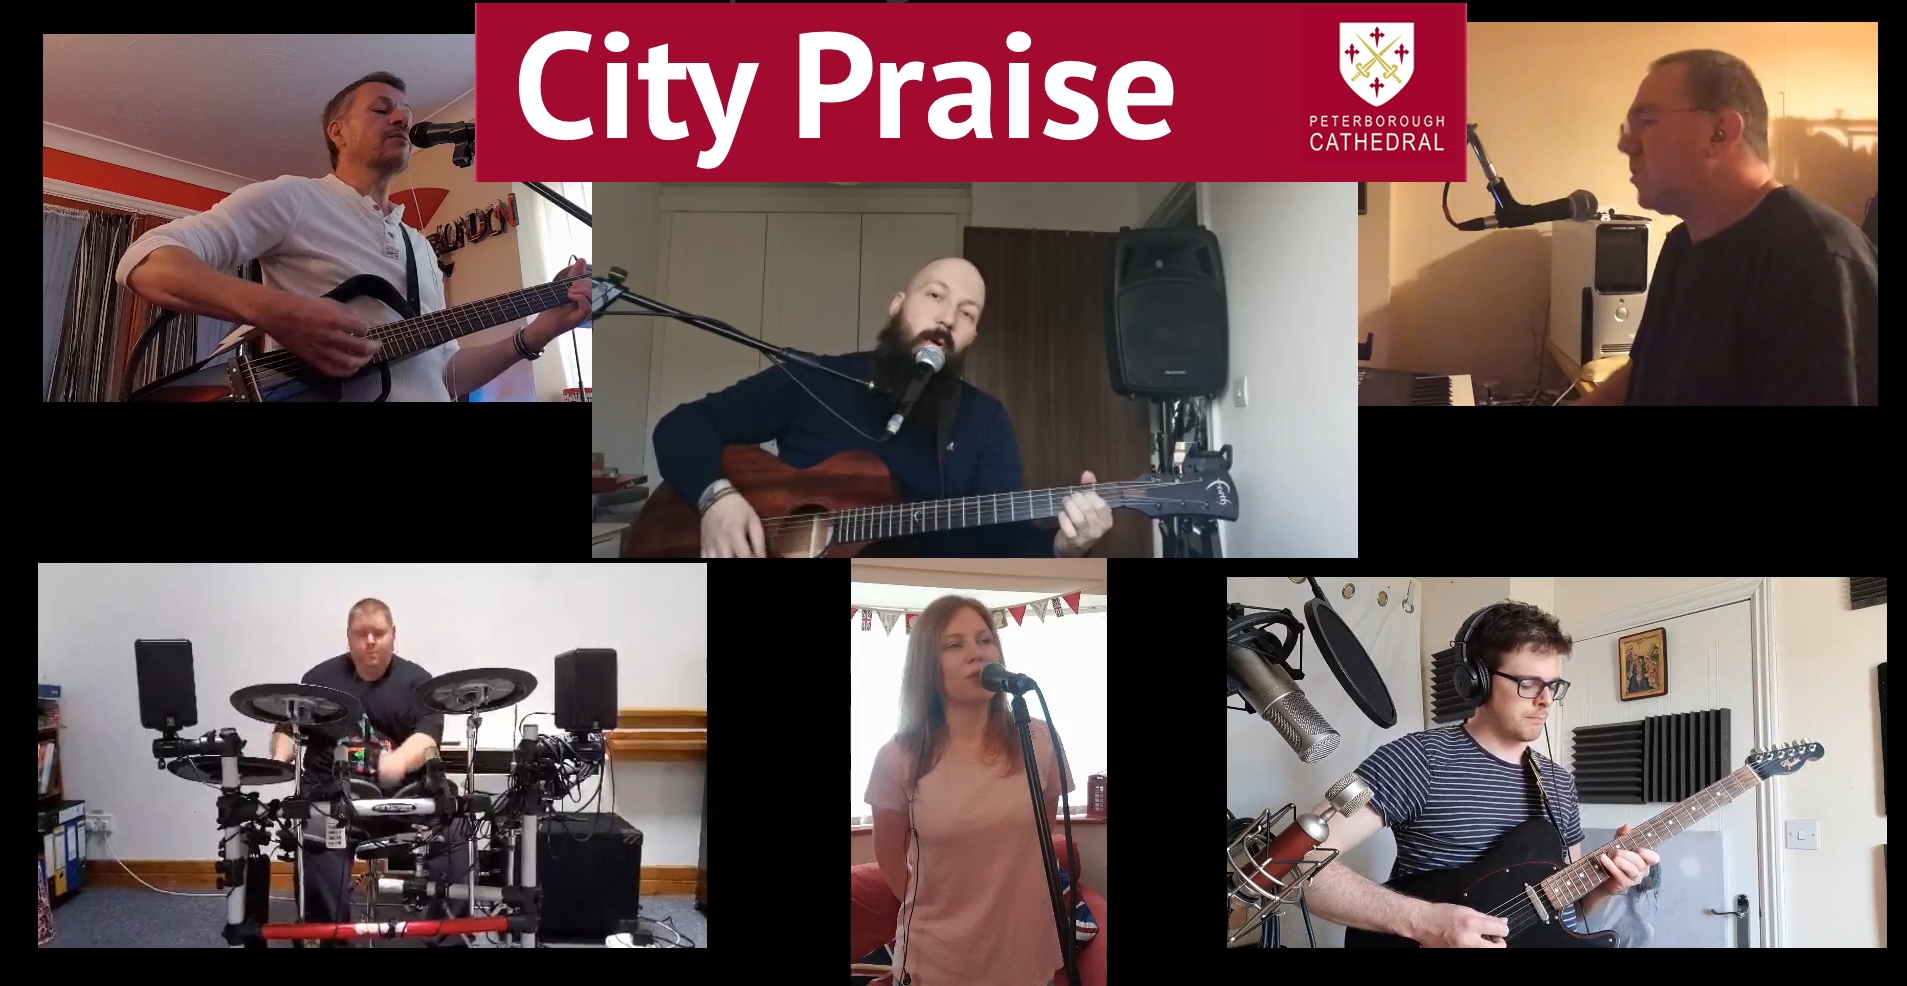 City Praise band